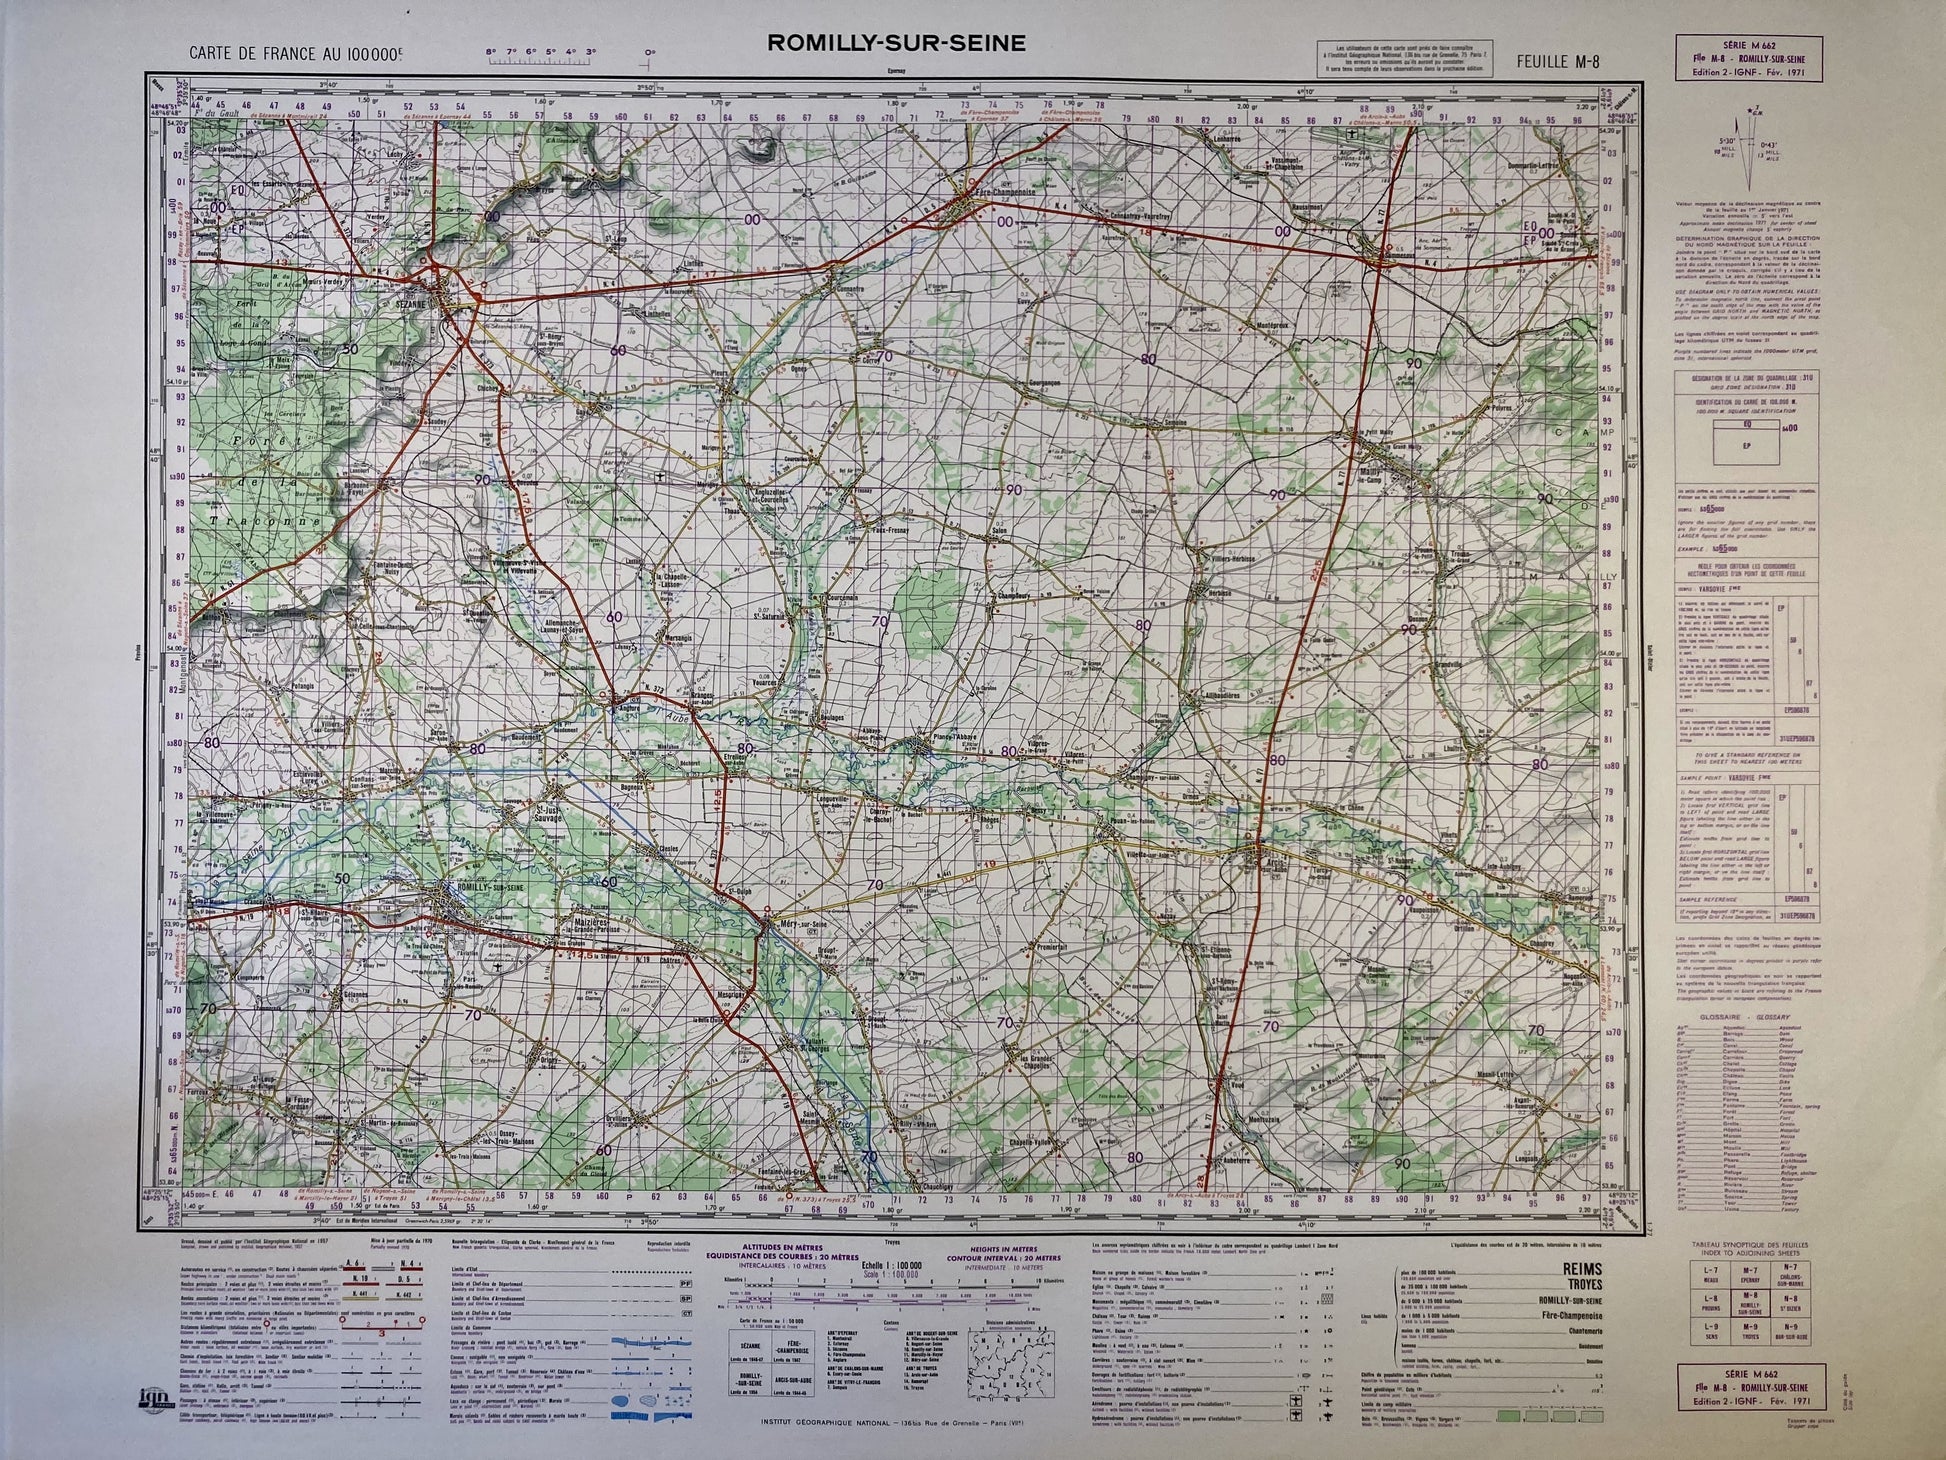 Carte IGN ancienne de Romilly-sur-Seine